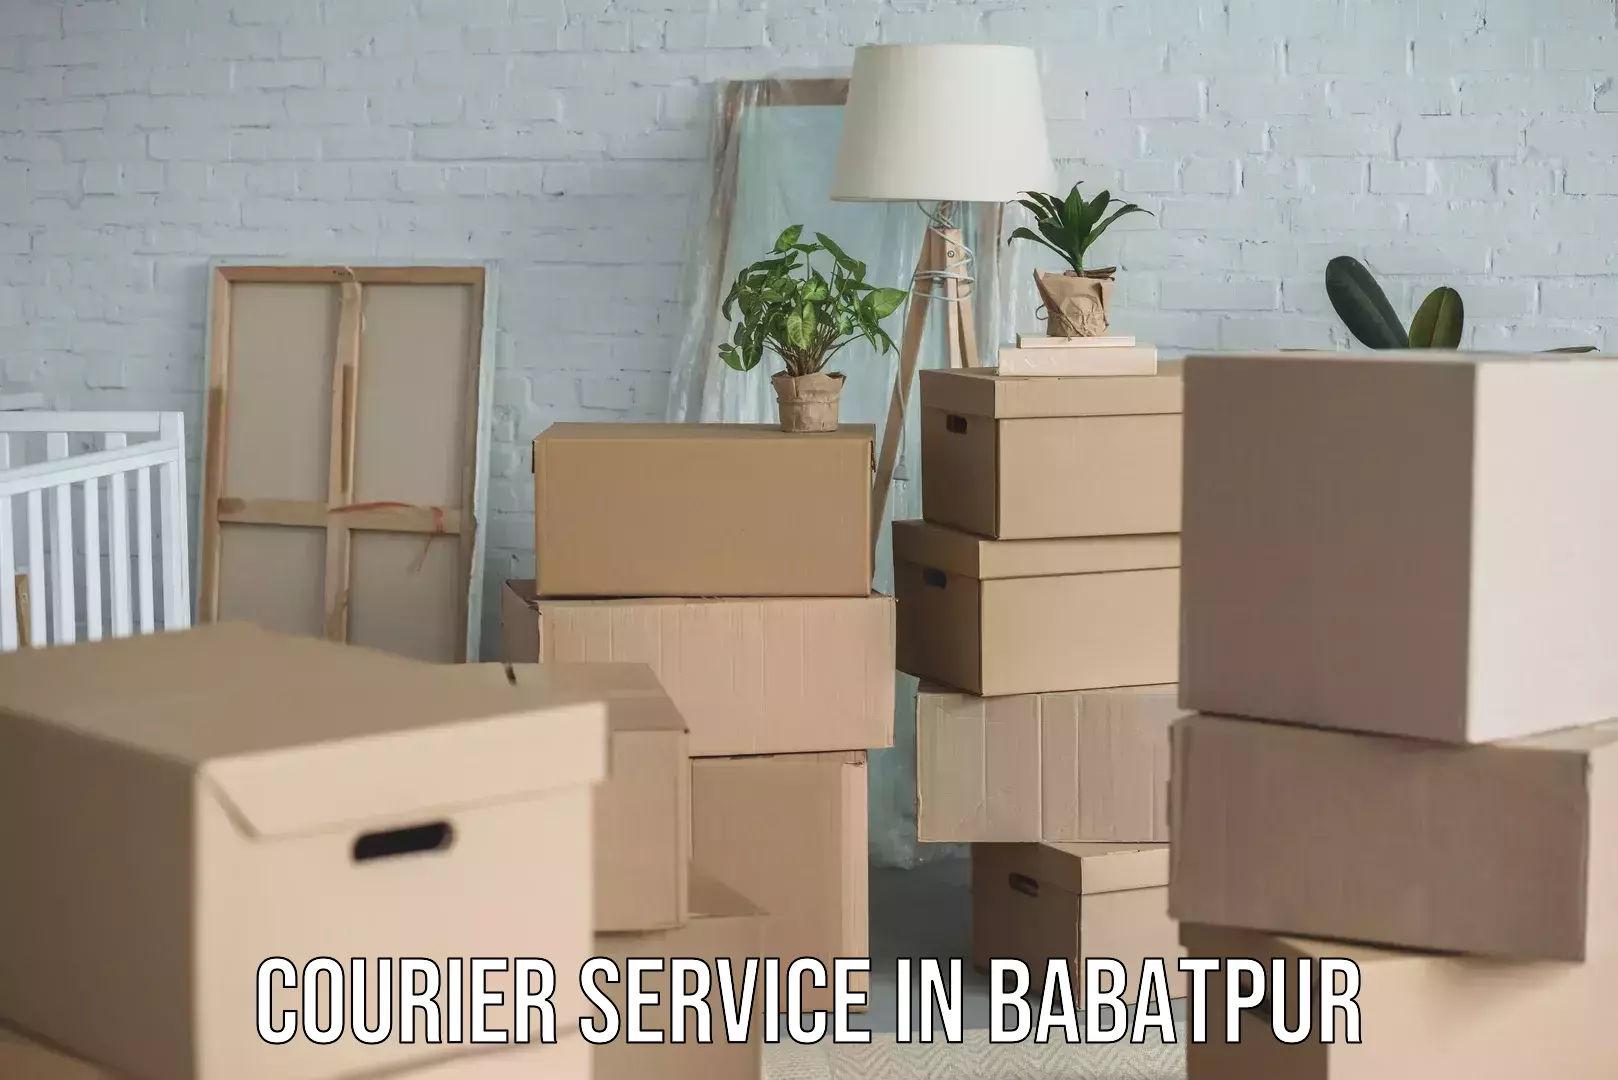 E-commerce fulfillment in Babatpur